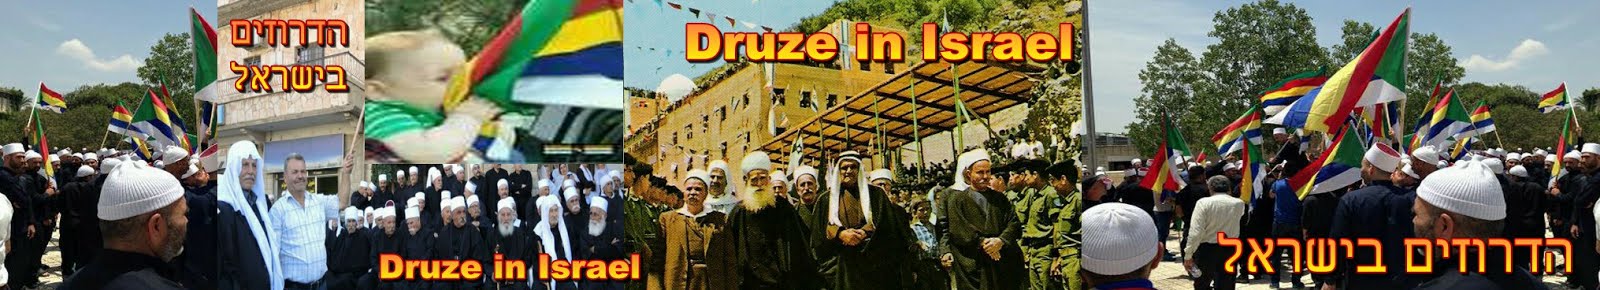 Druze in Israel - הדרוזים בישראל